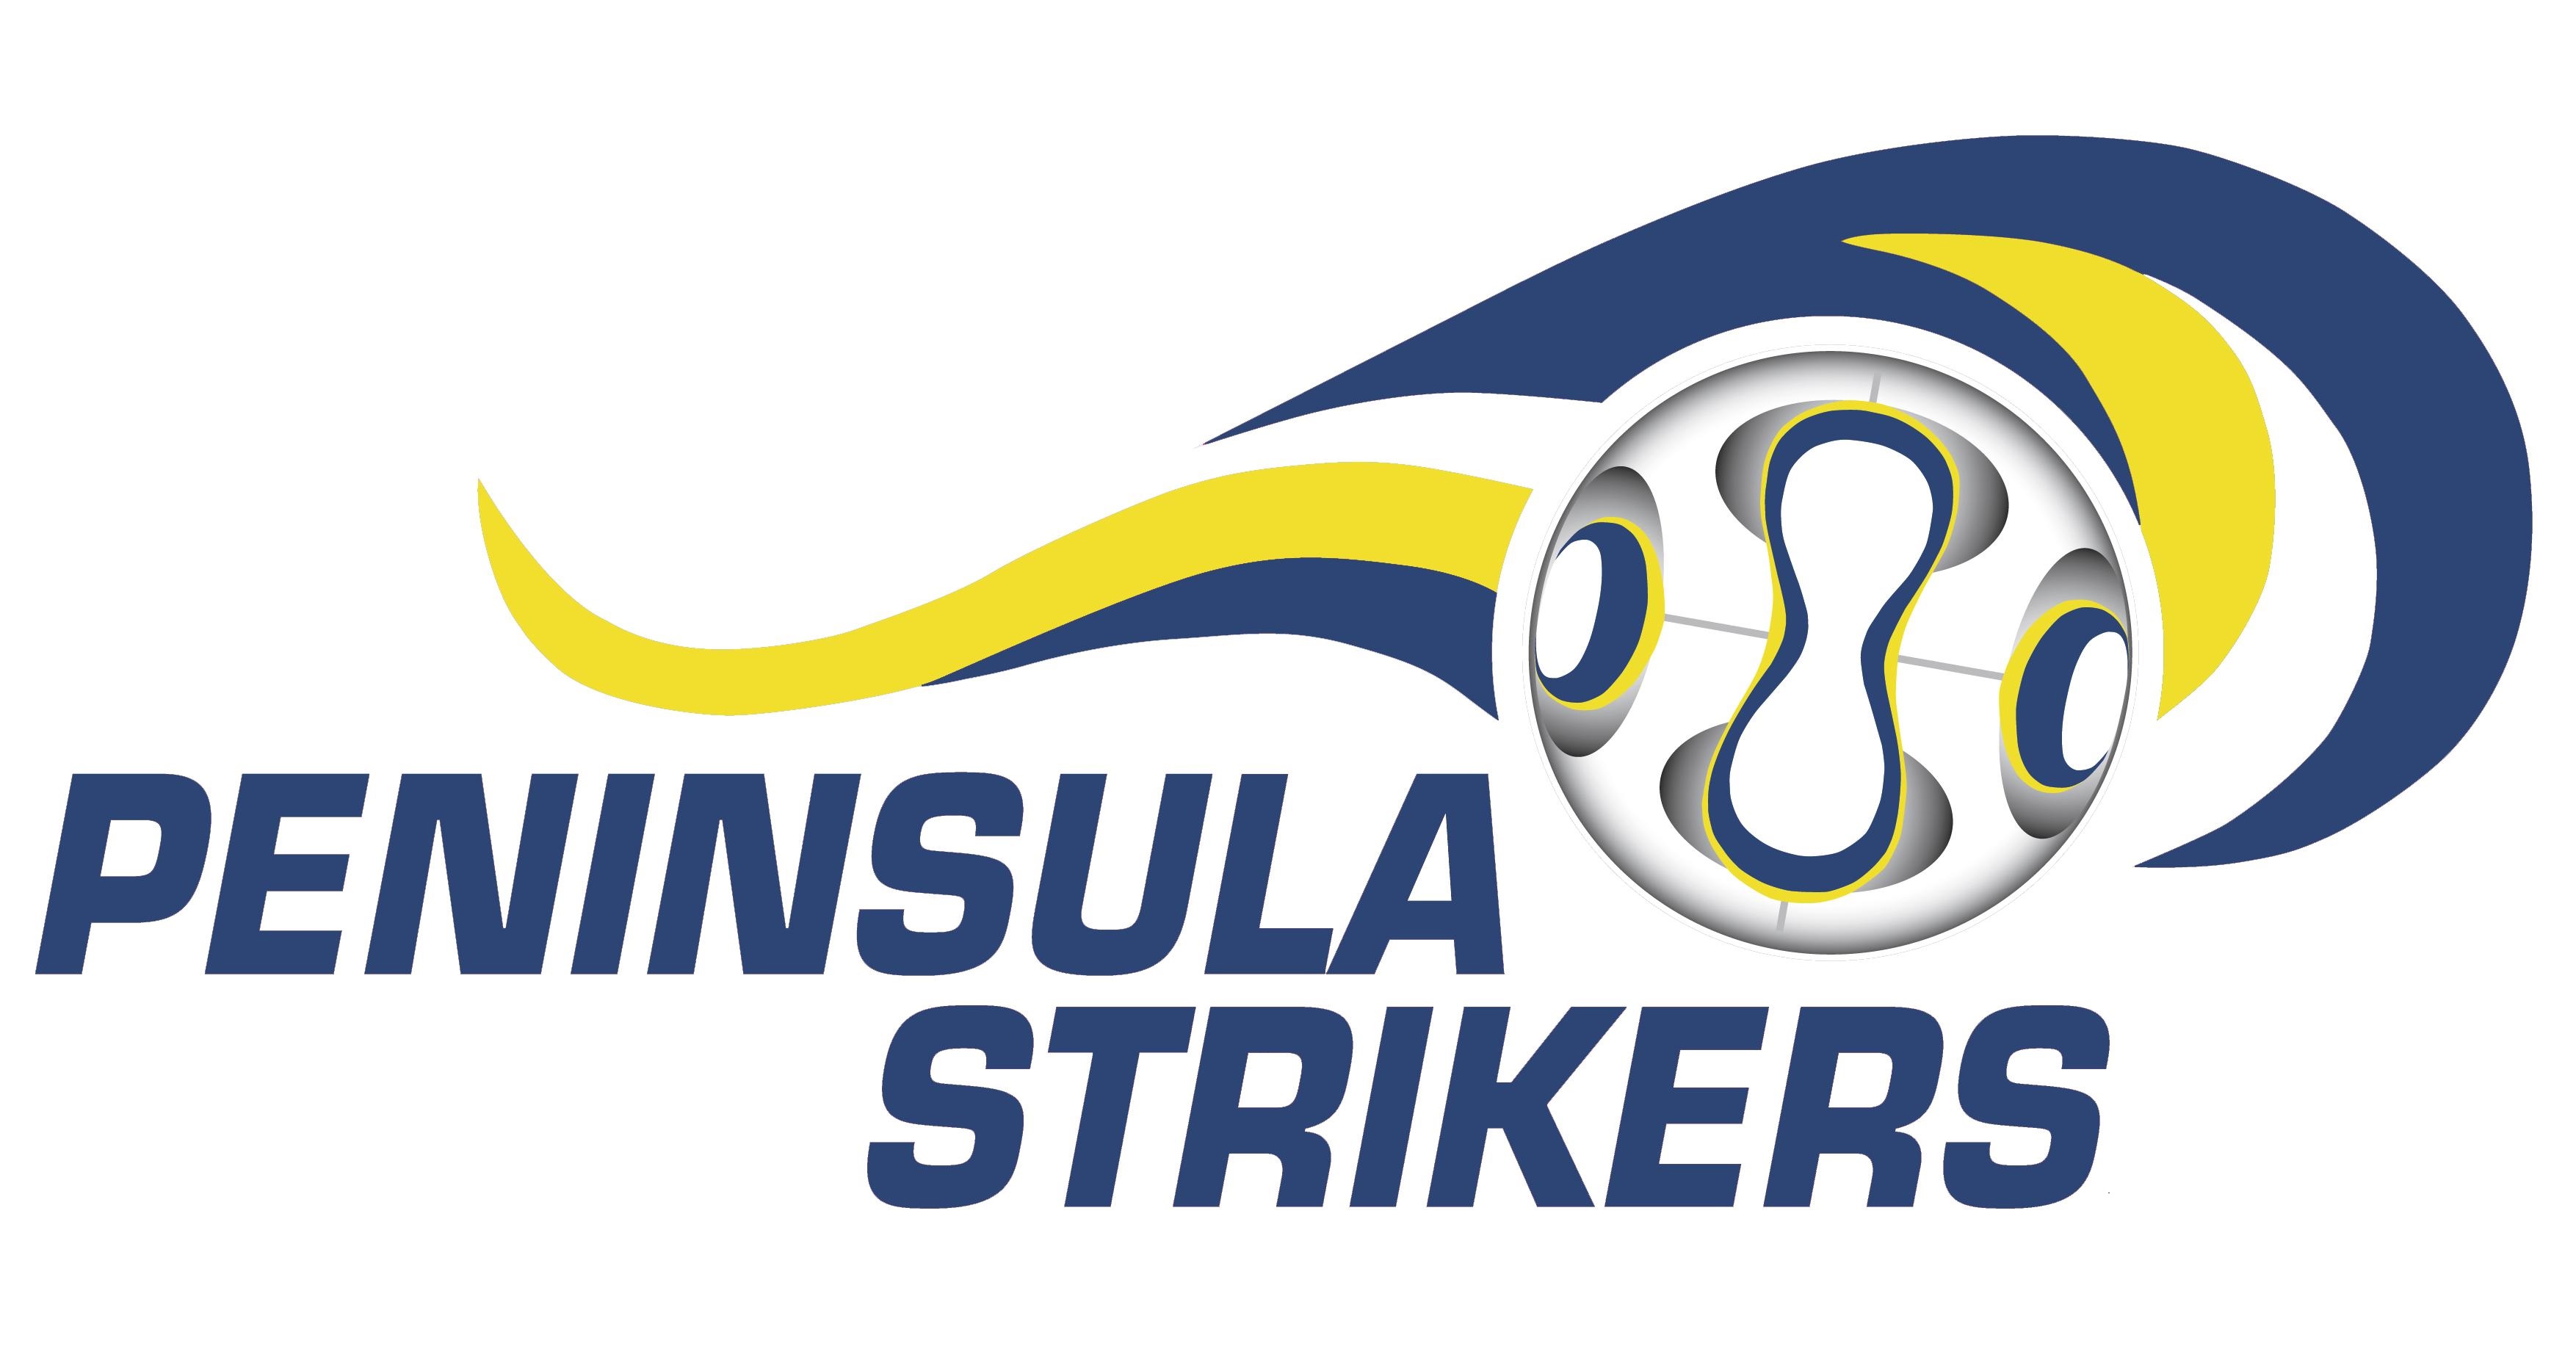 Peninsula Strikers Senior FC